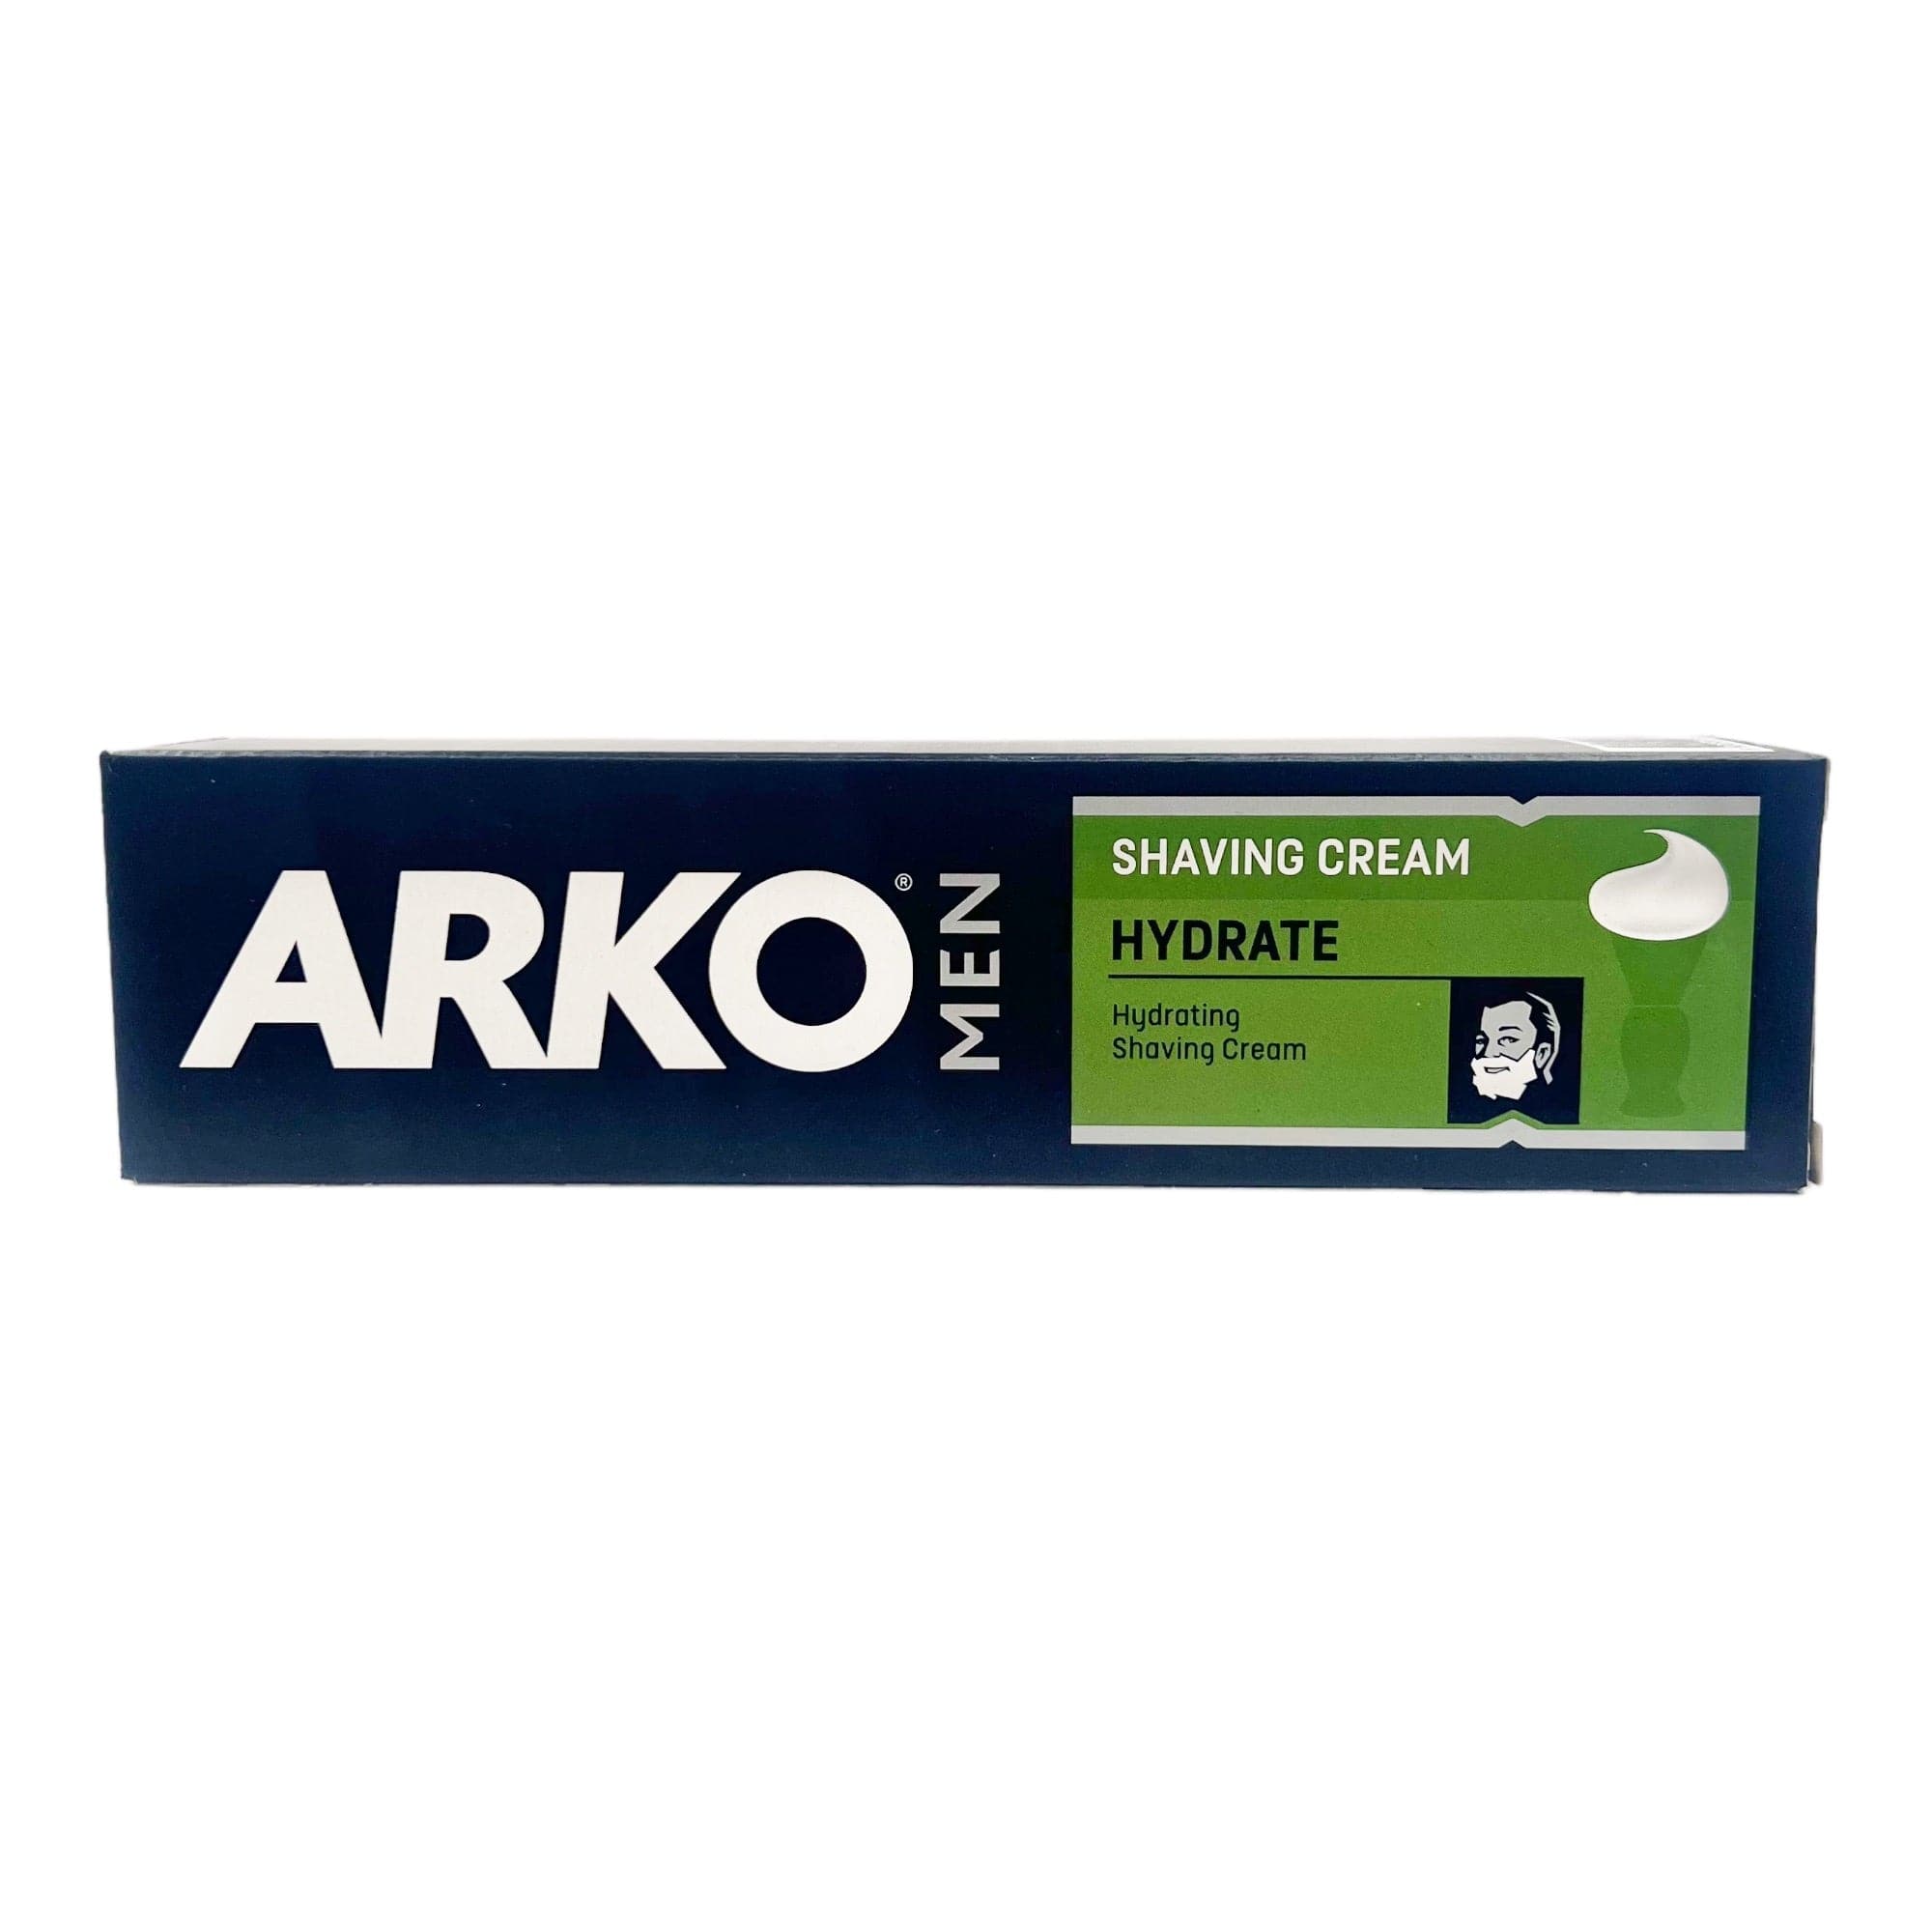 Arko - Men Shaving Cream Hydrate 100g - Eson Direct